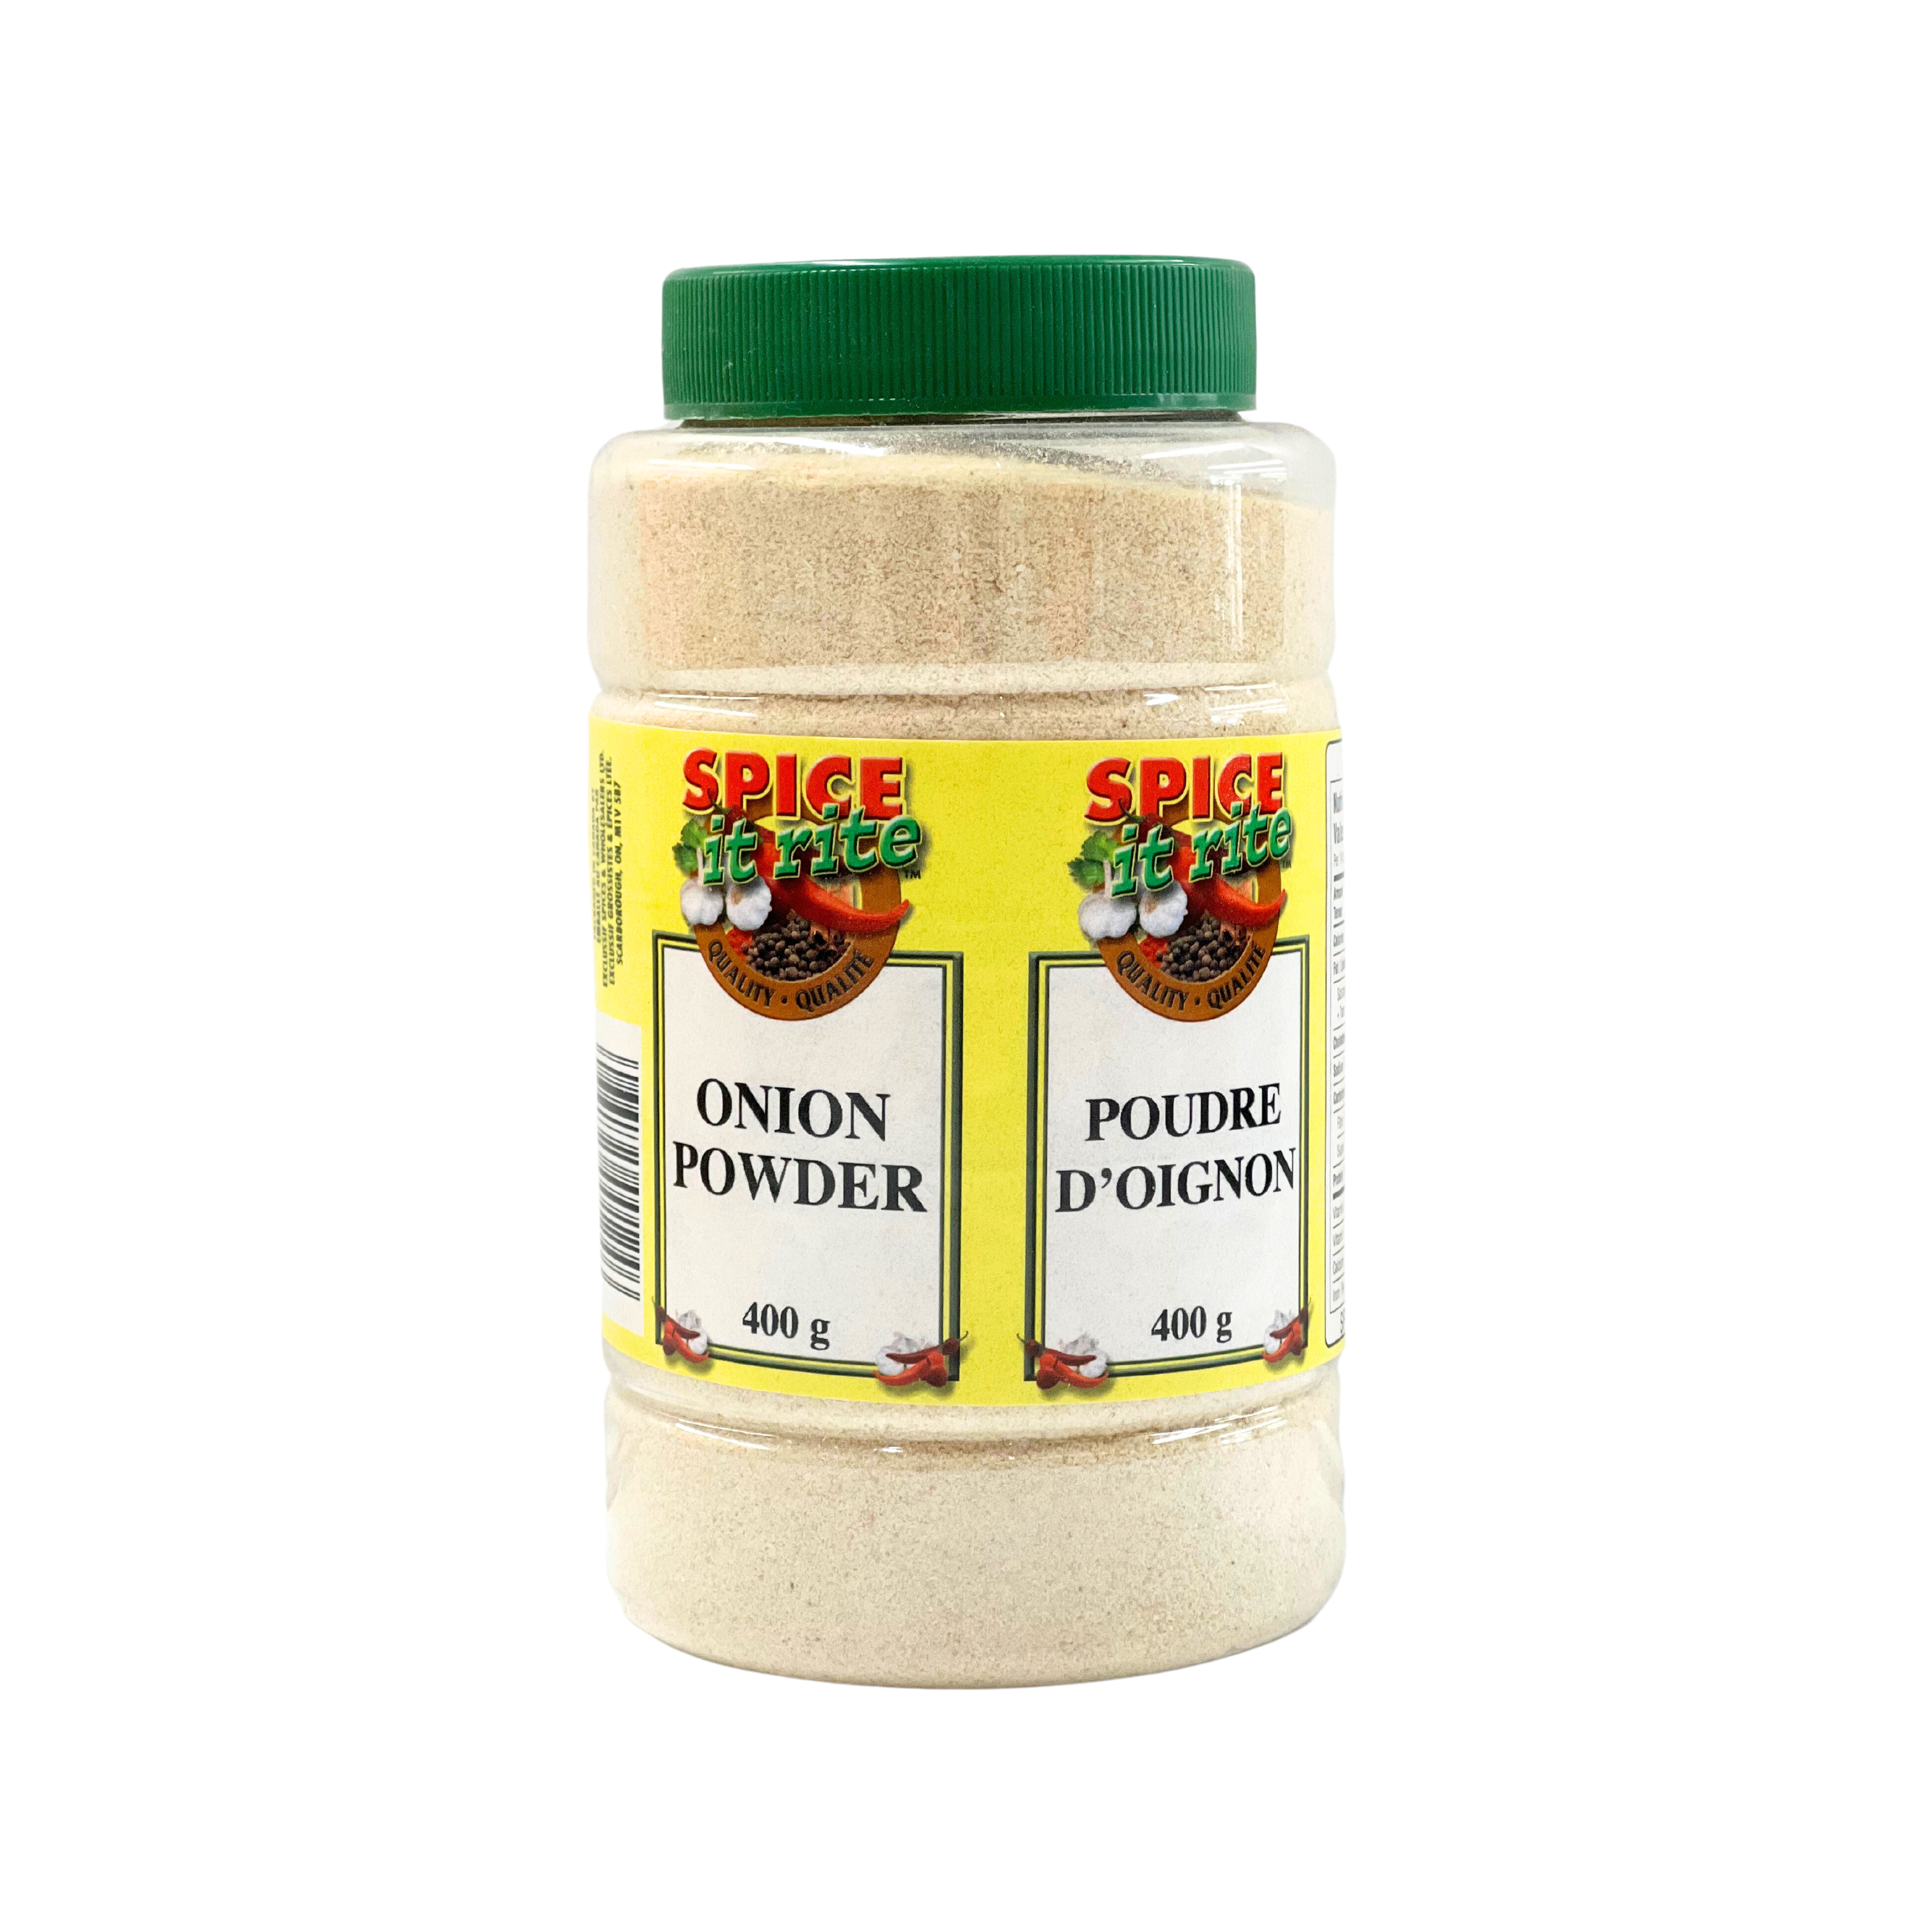 Spice it rite Onion Powder 400g